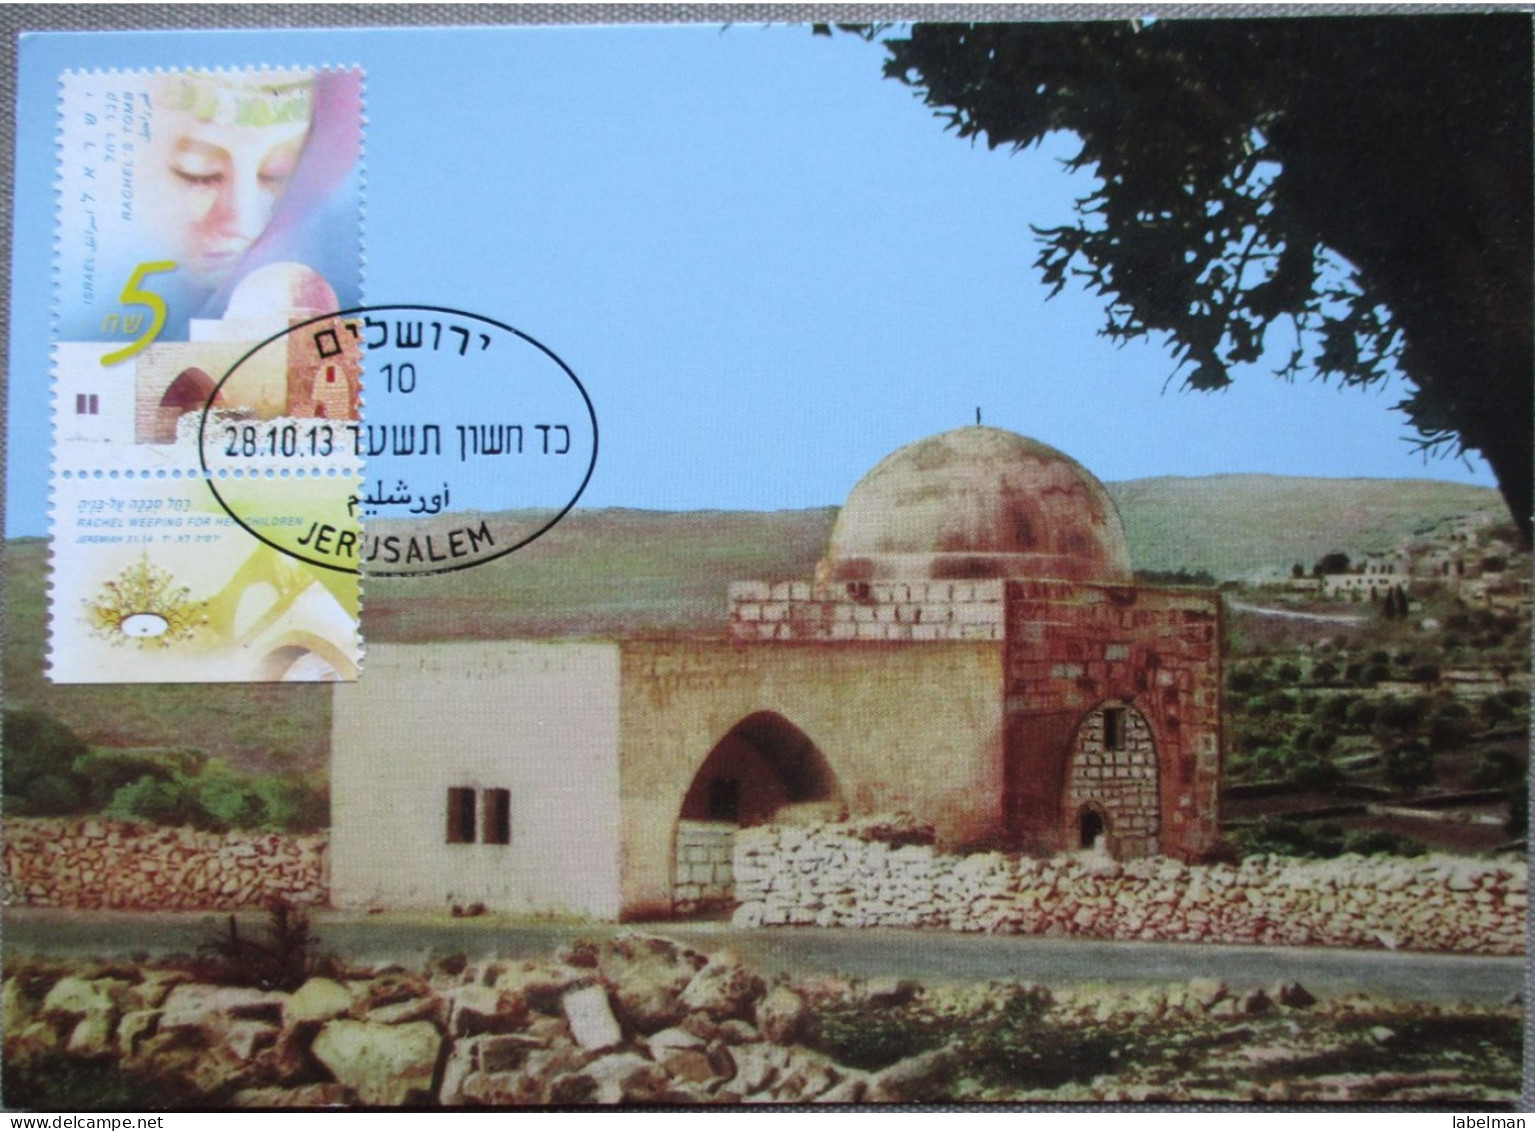 ISRAEL 2013 MAXIMUM CARD POSTCARD BETHLEHEM RACHEL TOMB FIRST DAY OF ISSUE CARTOLINA CARTE POSTALE POSTKARTE CARTOLINA - Maximumkaarten